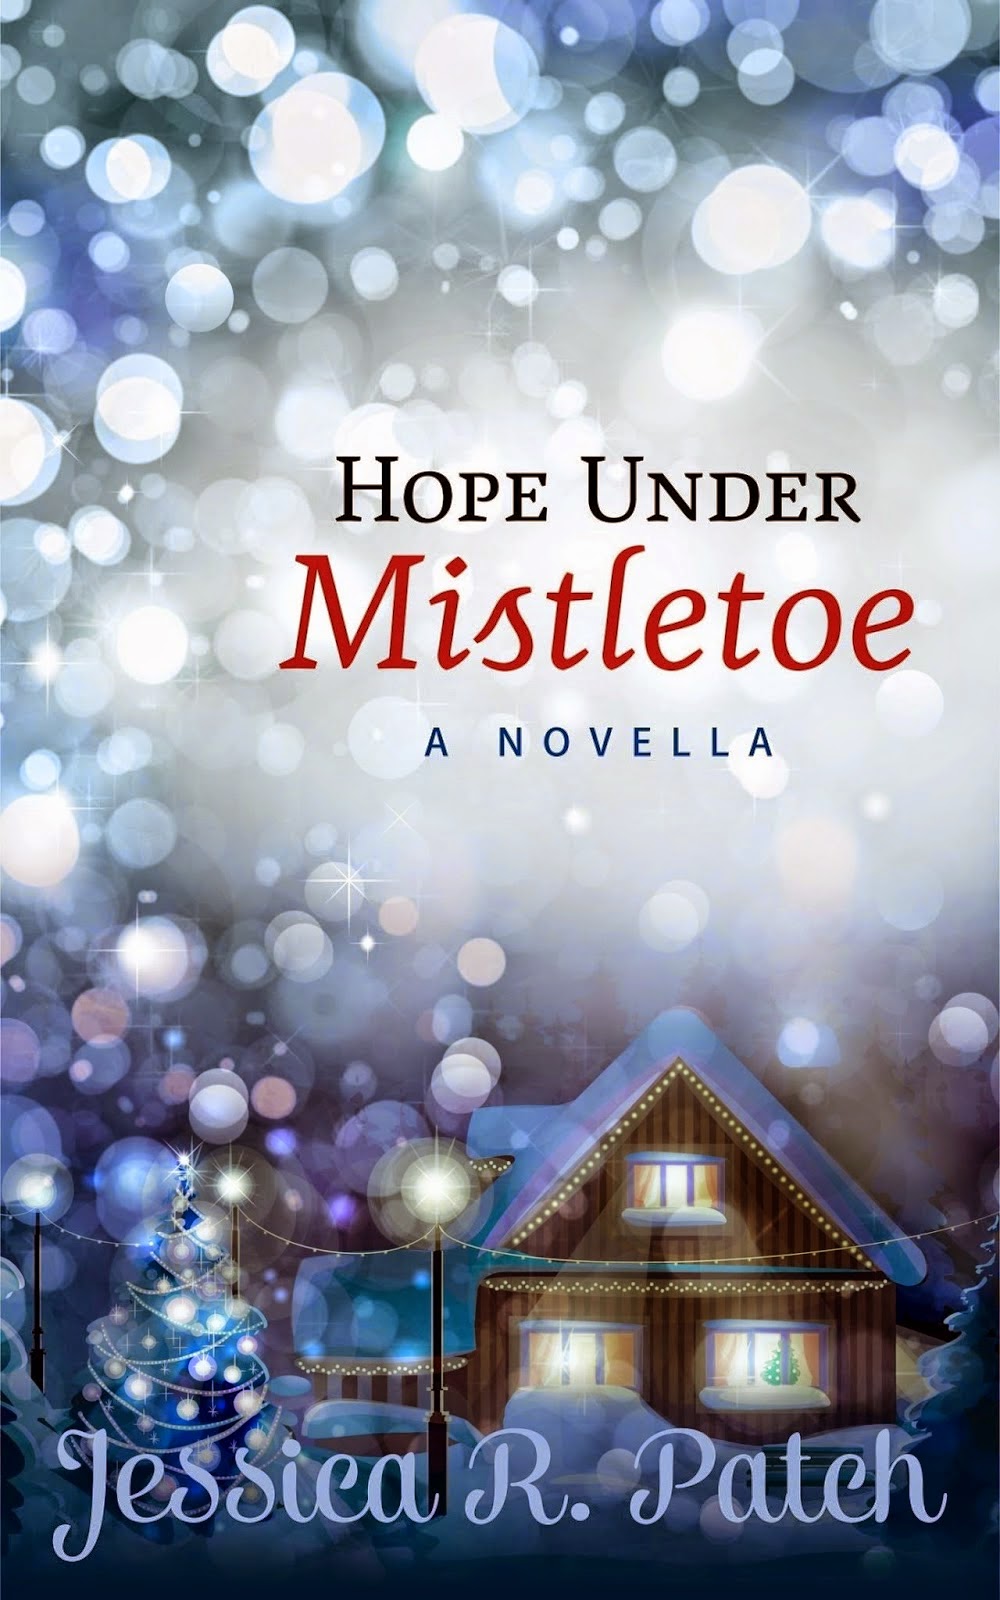 COTT: Hope Under Mistletoe by Jessica R. Patch